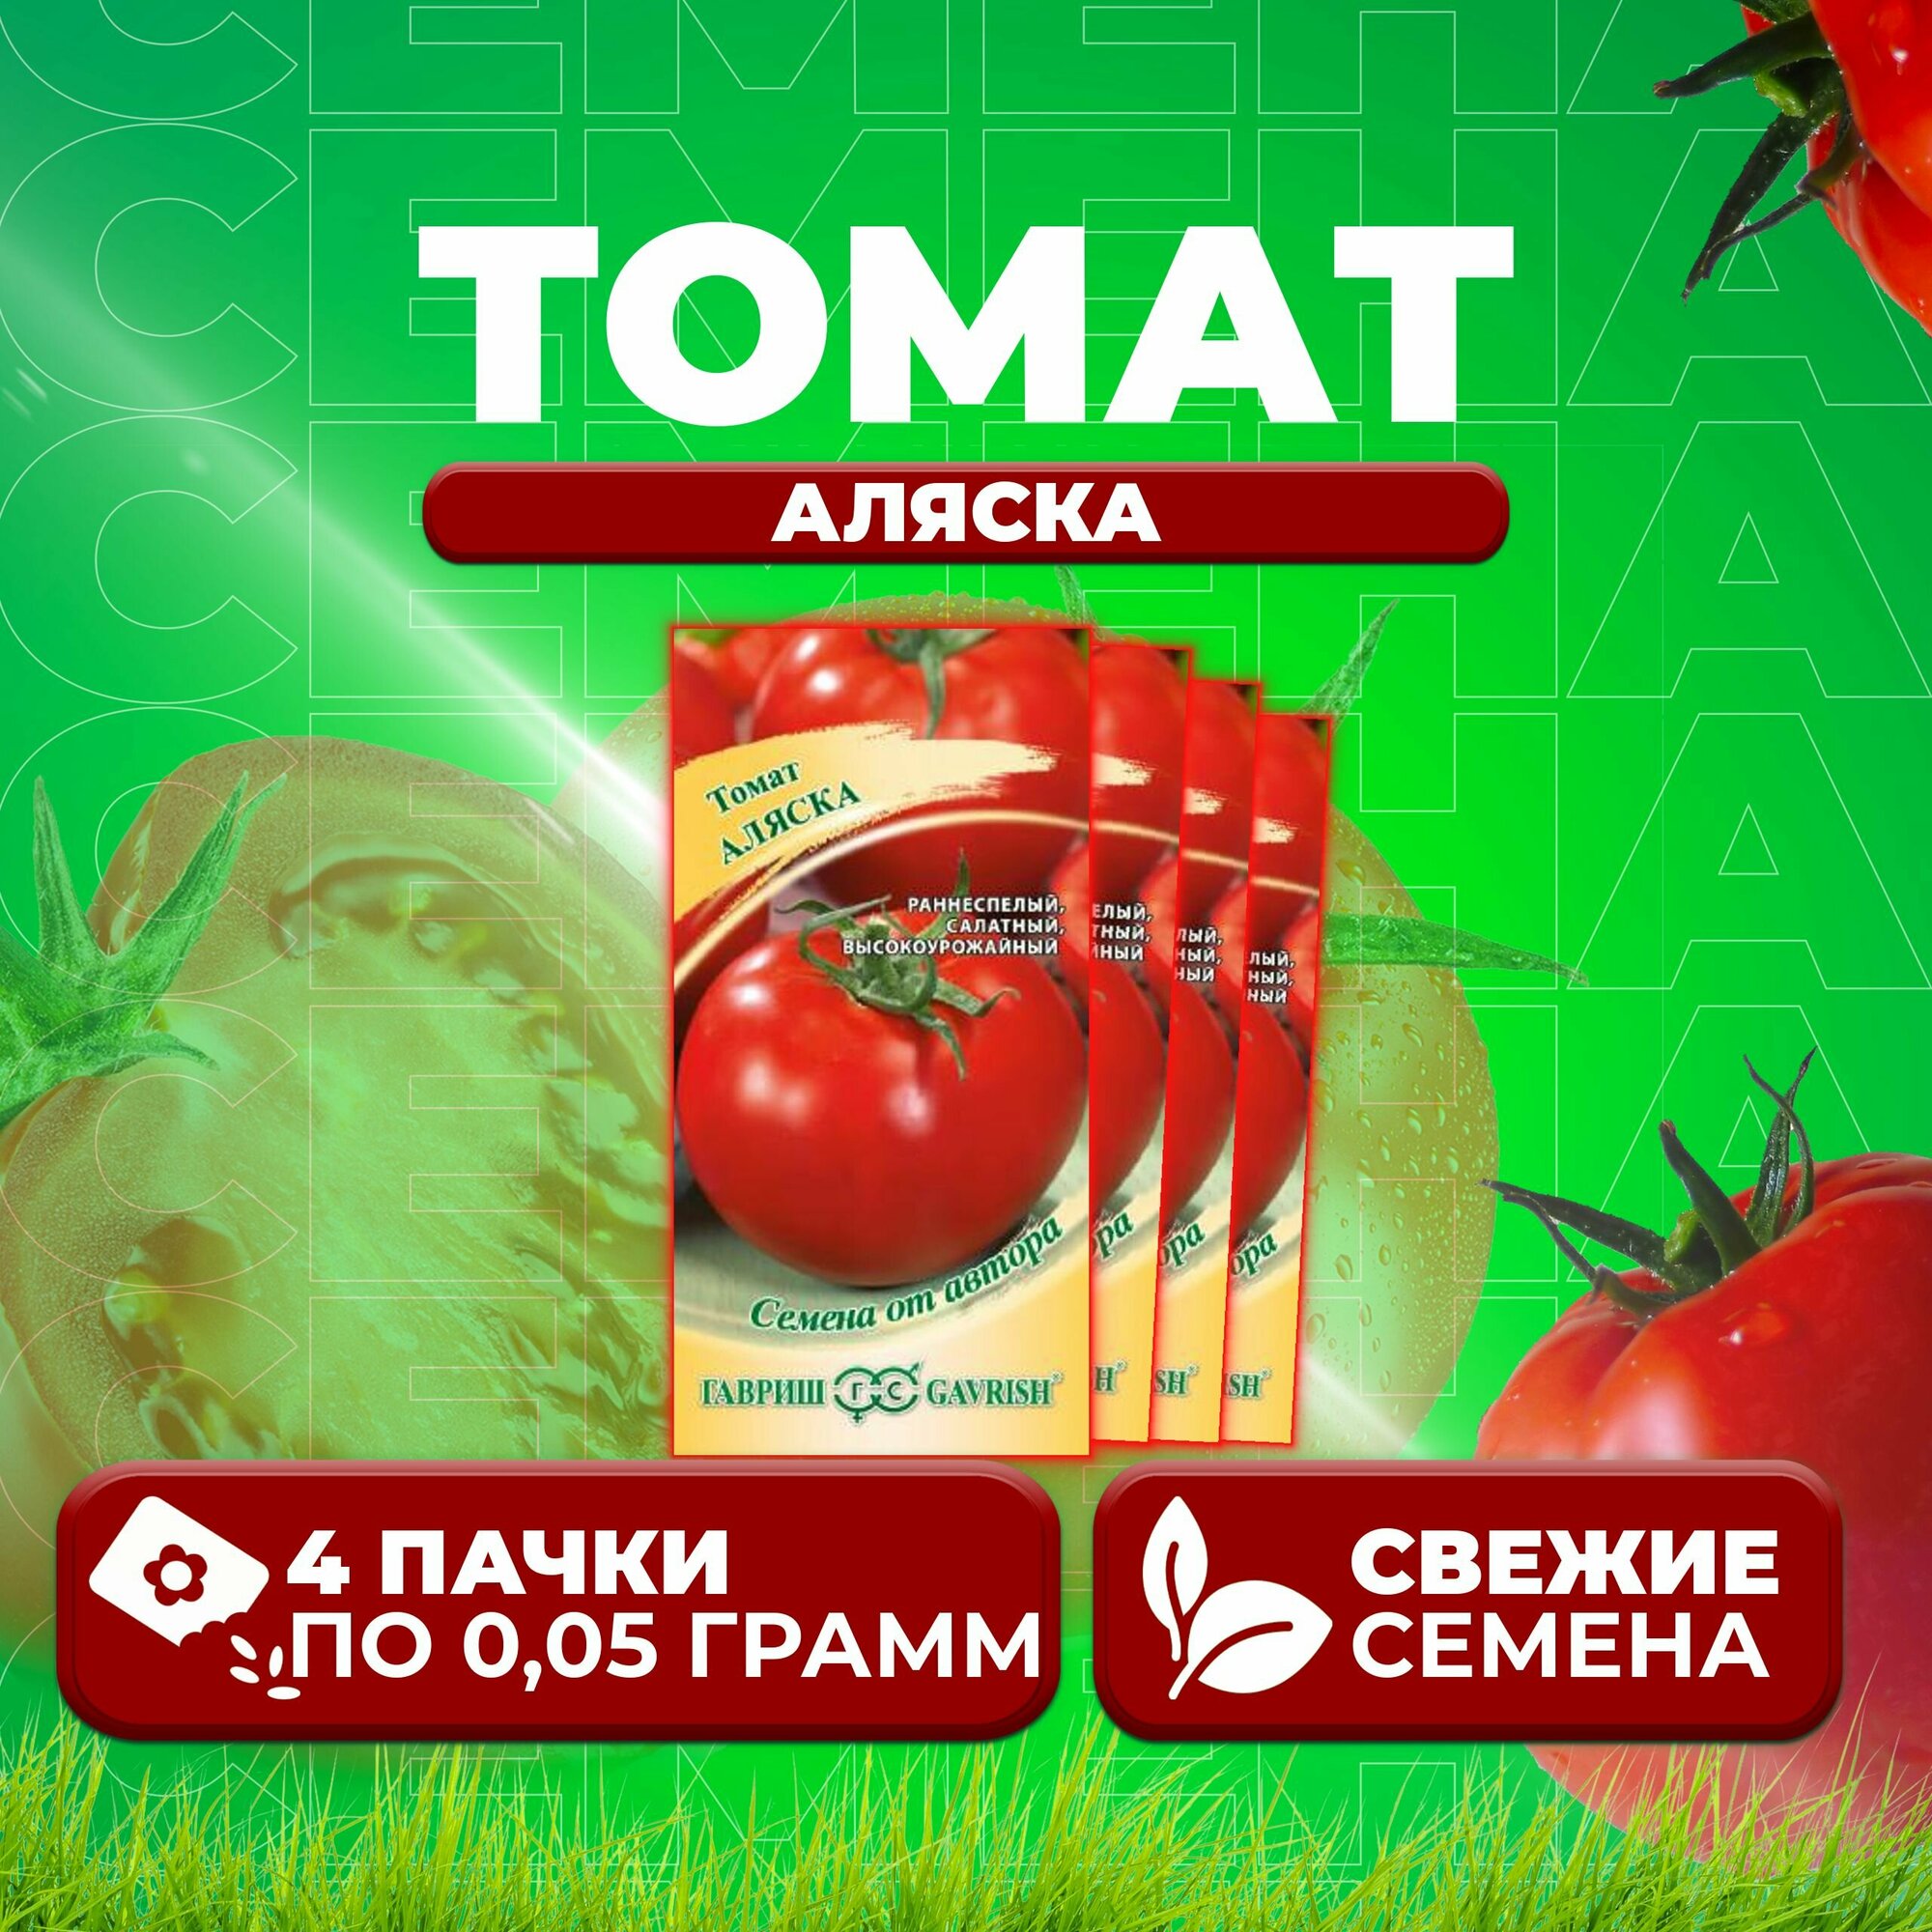 Семена томатов Аляска 4 уп. по 005 гр Гавриш помидор для подоконников ранний от автора